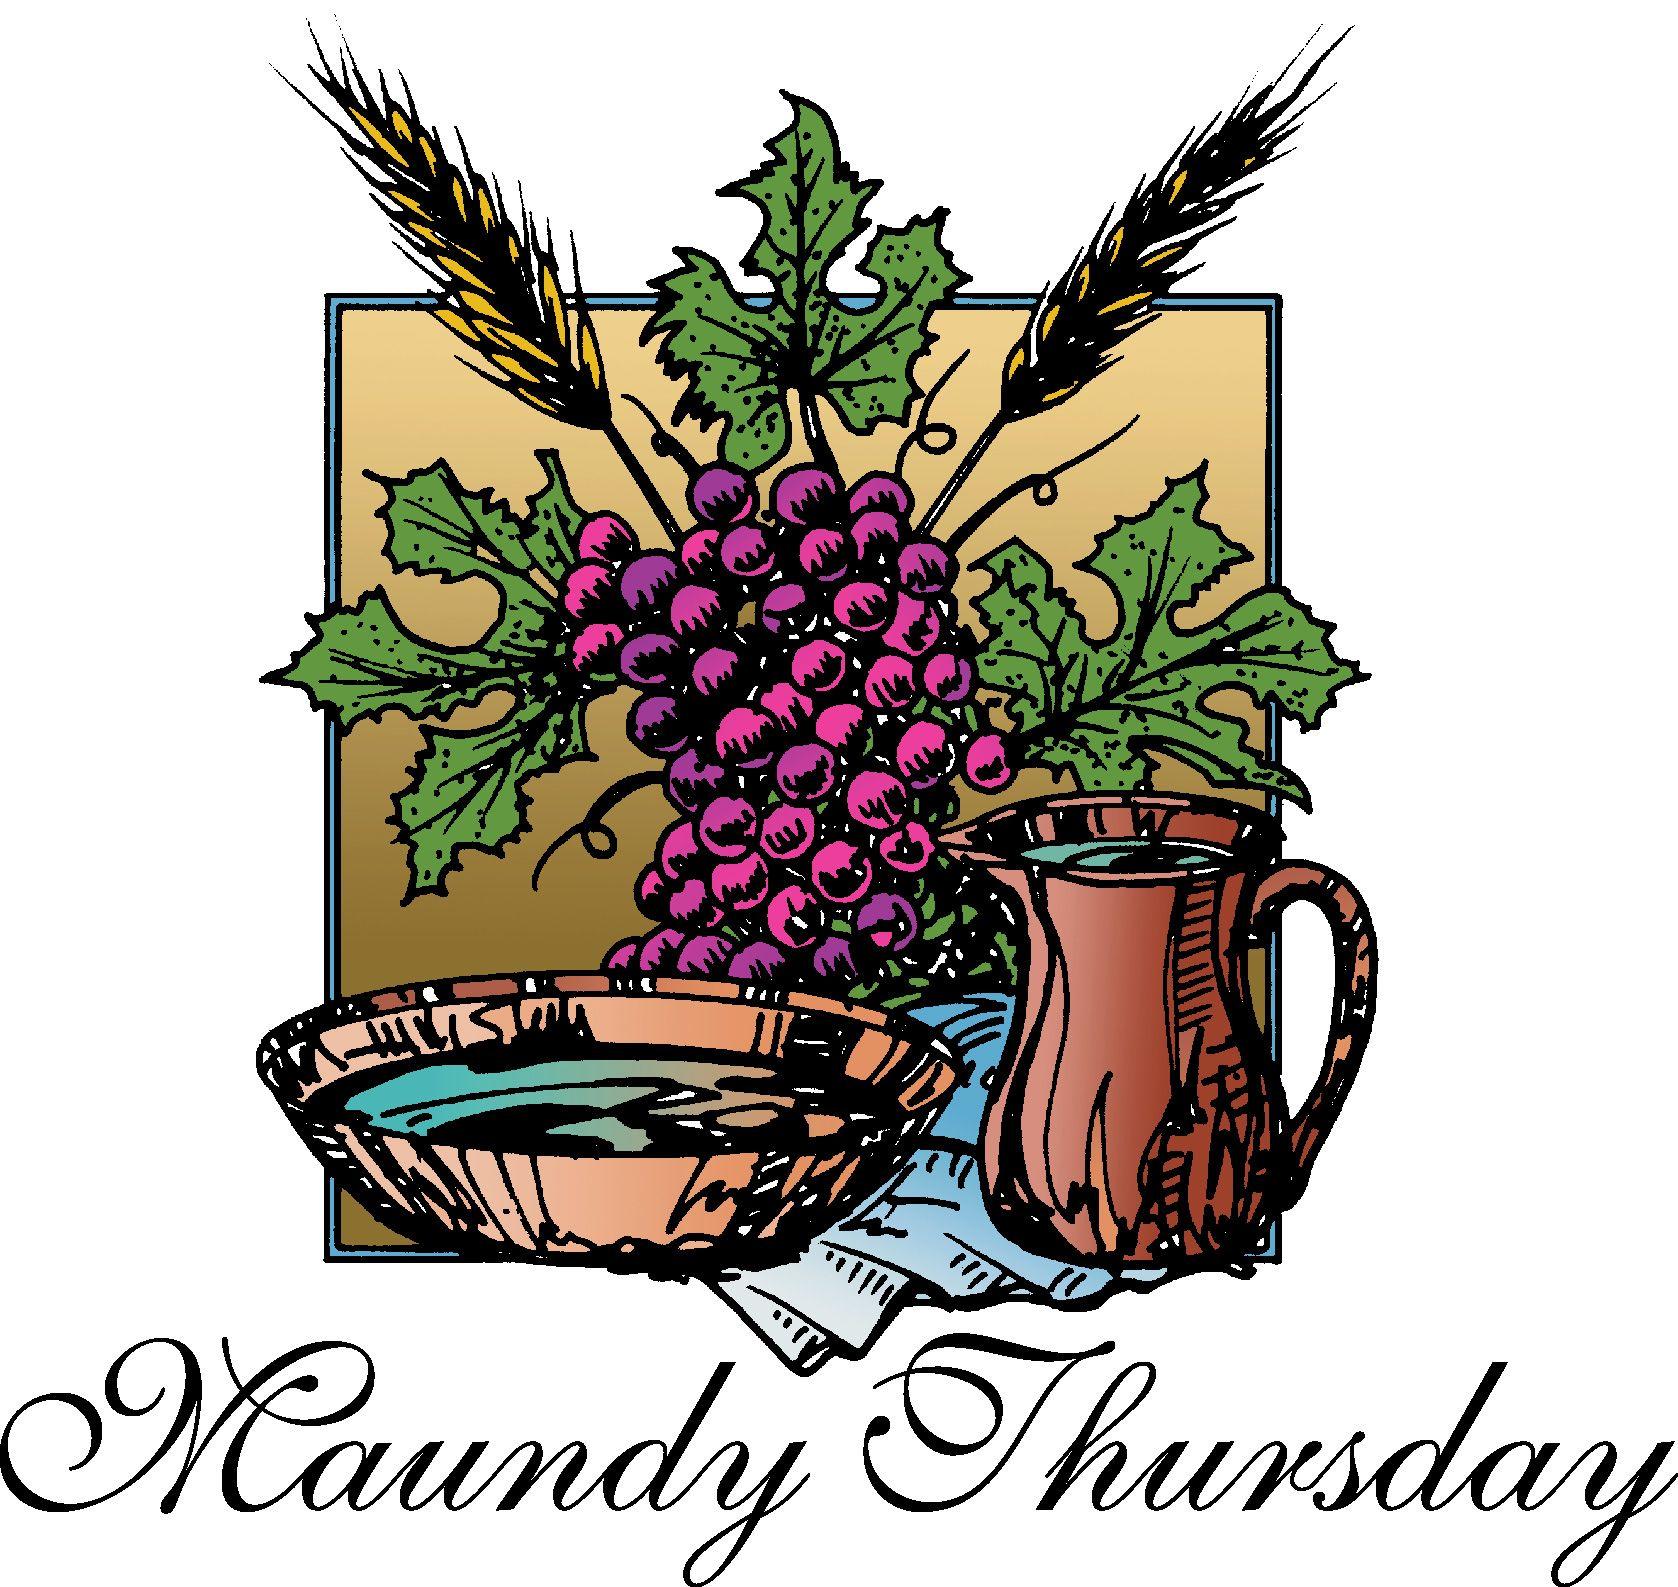 image For > Maundy Thursday Image. The Church Calendar Year